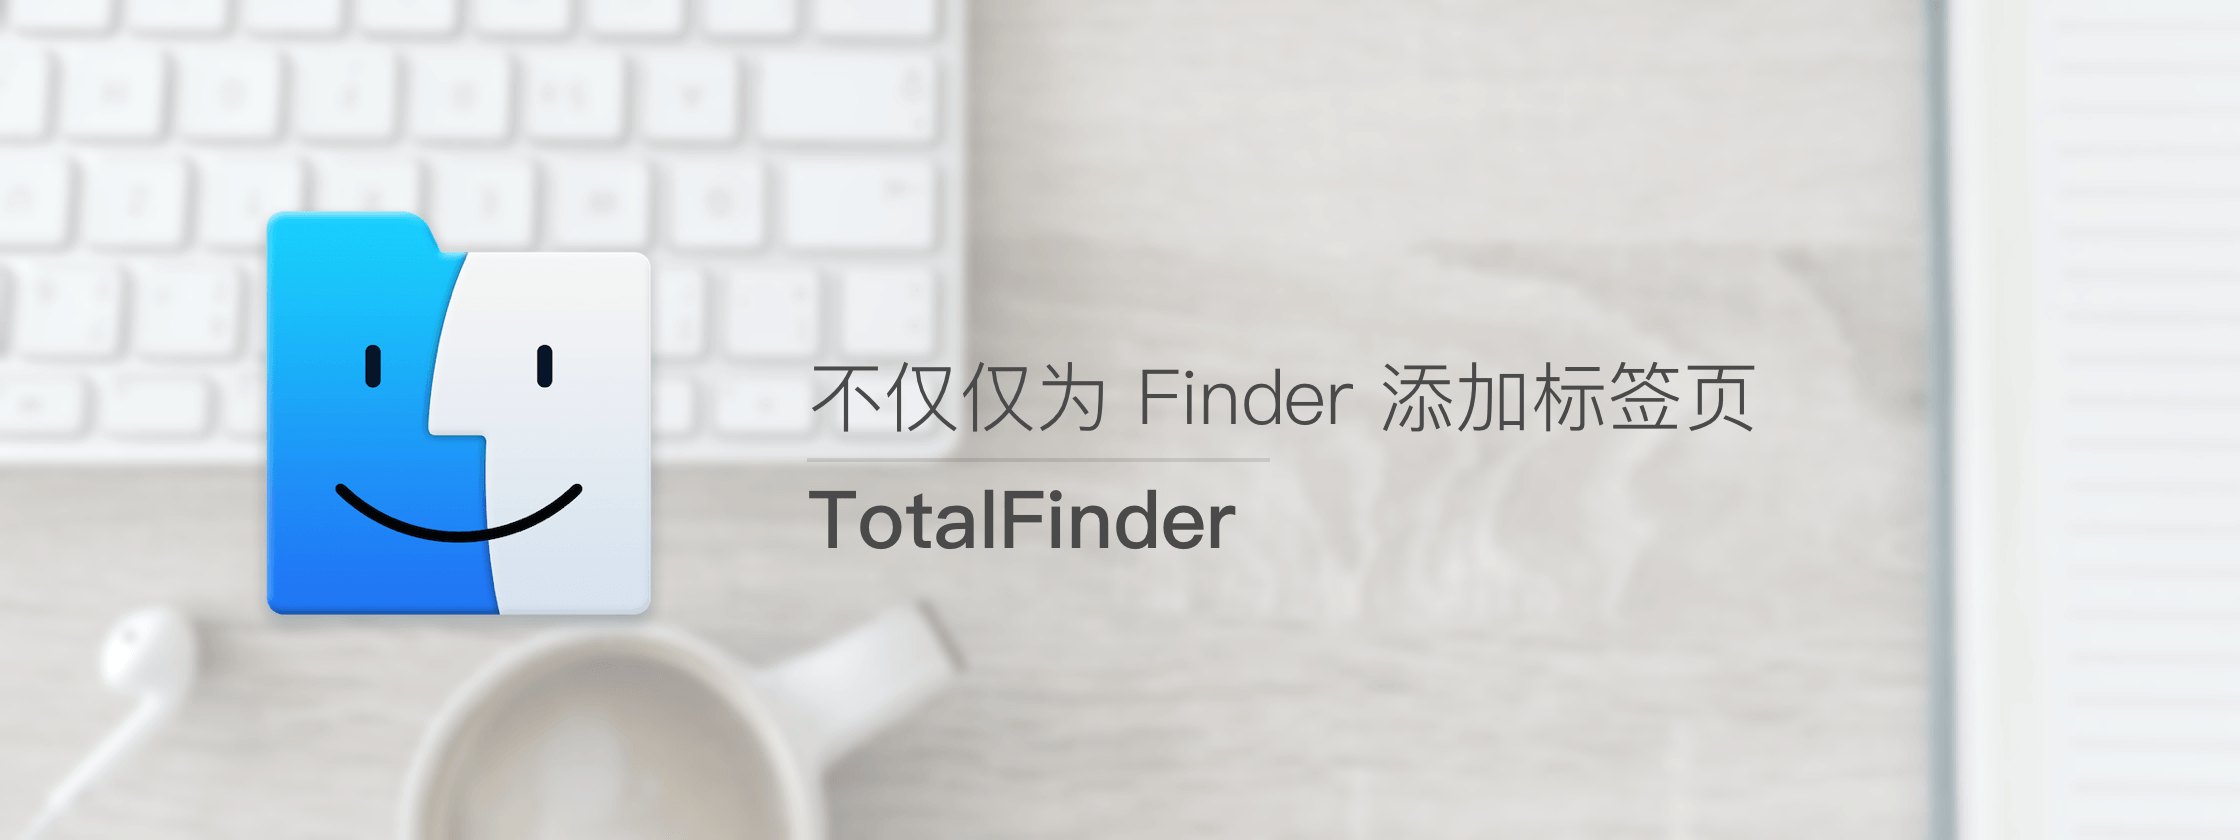 TotalFinder – 不仅仅为 Finder 添加标签页